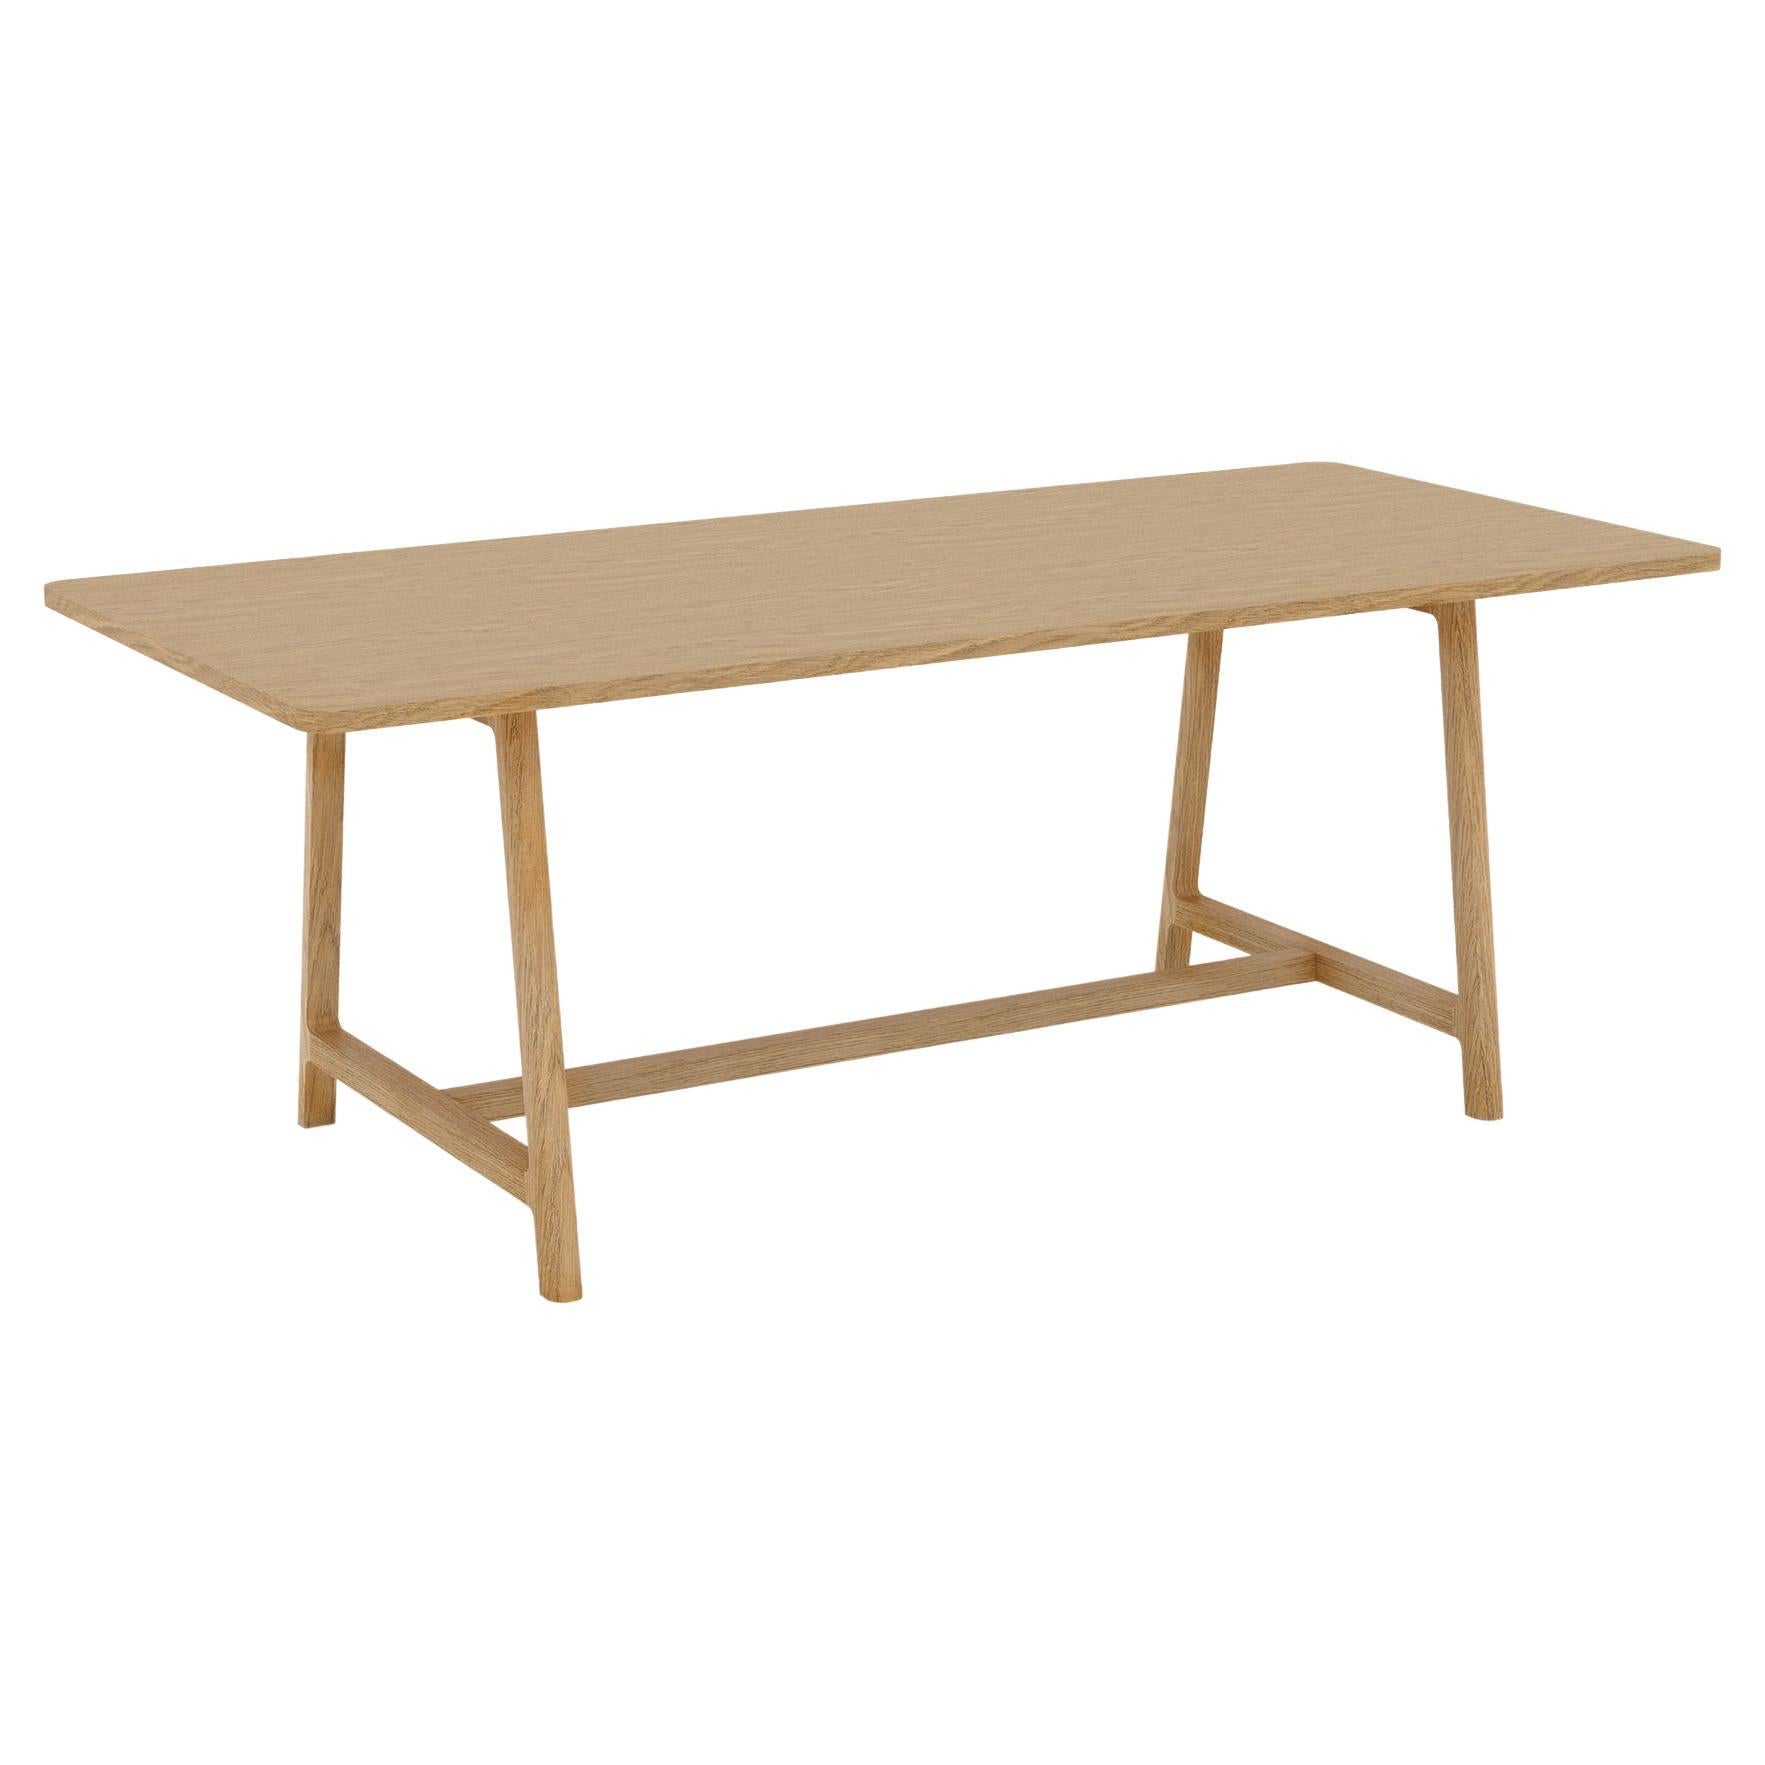 Table moderne minimaliste en bois de chêne FRAME Collection